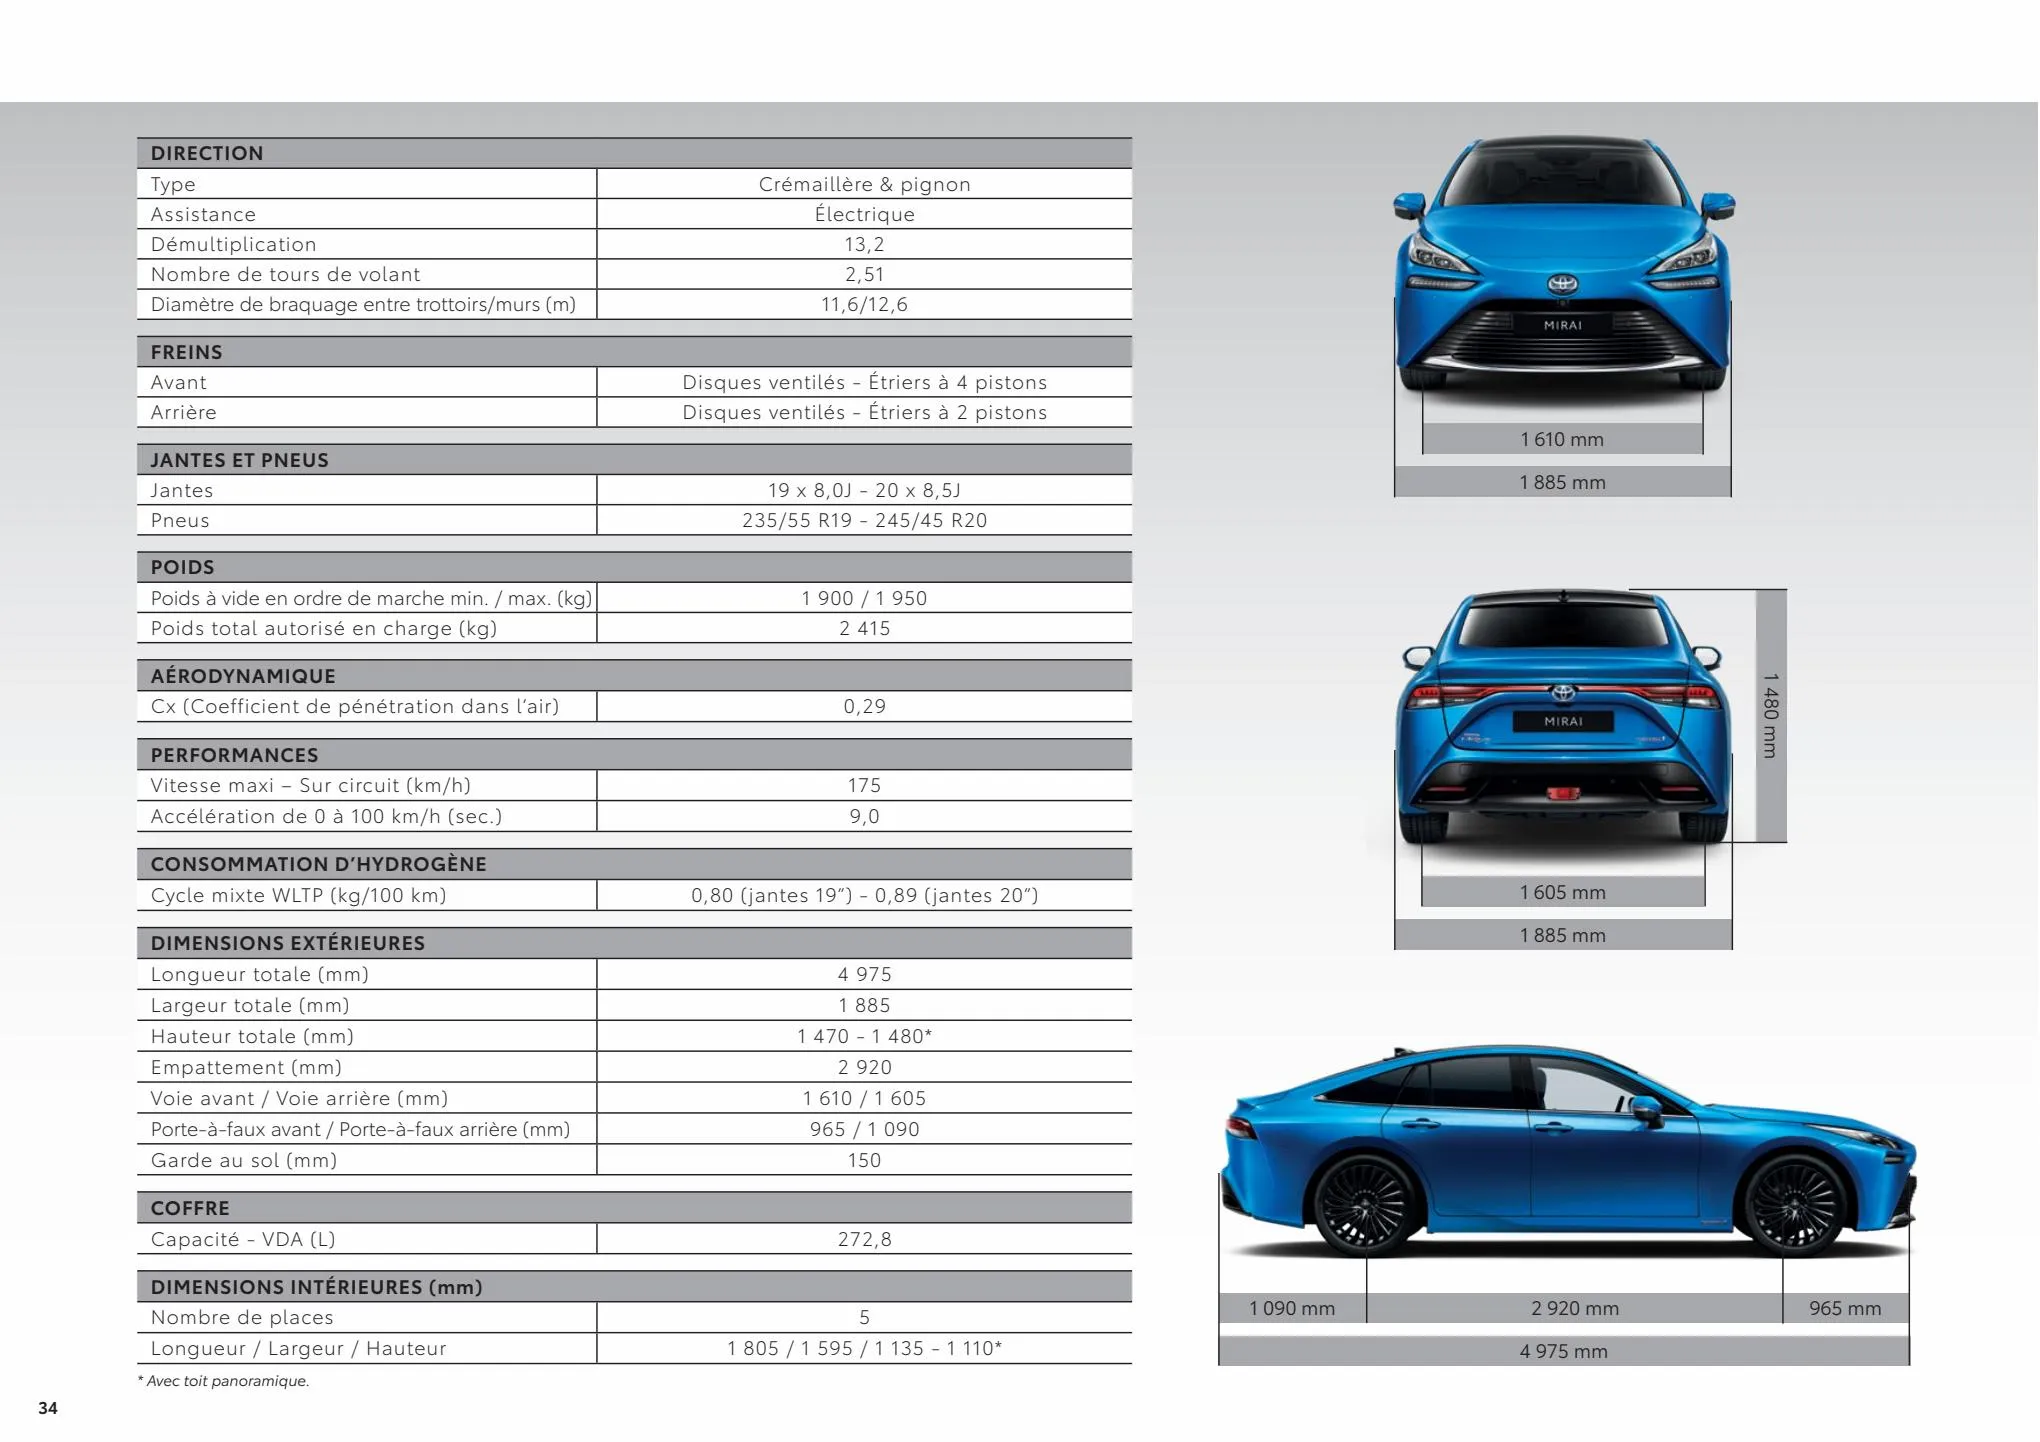 Catalogue Toyota Mirai, page 00034